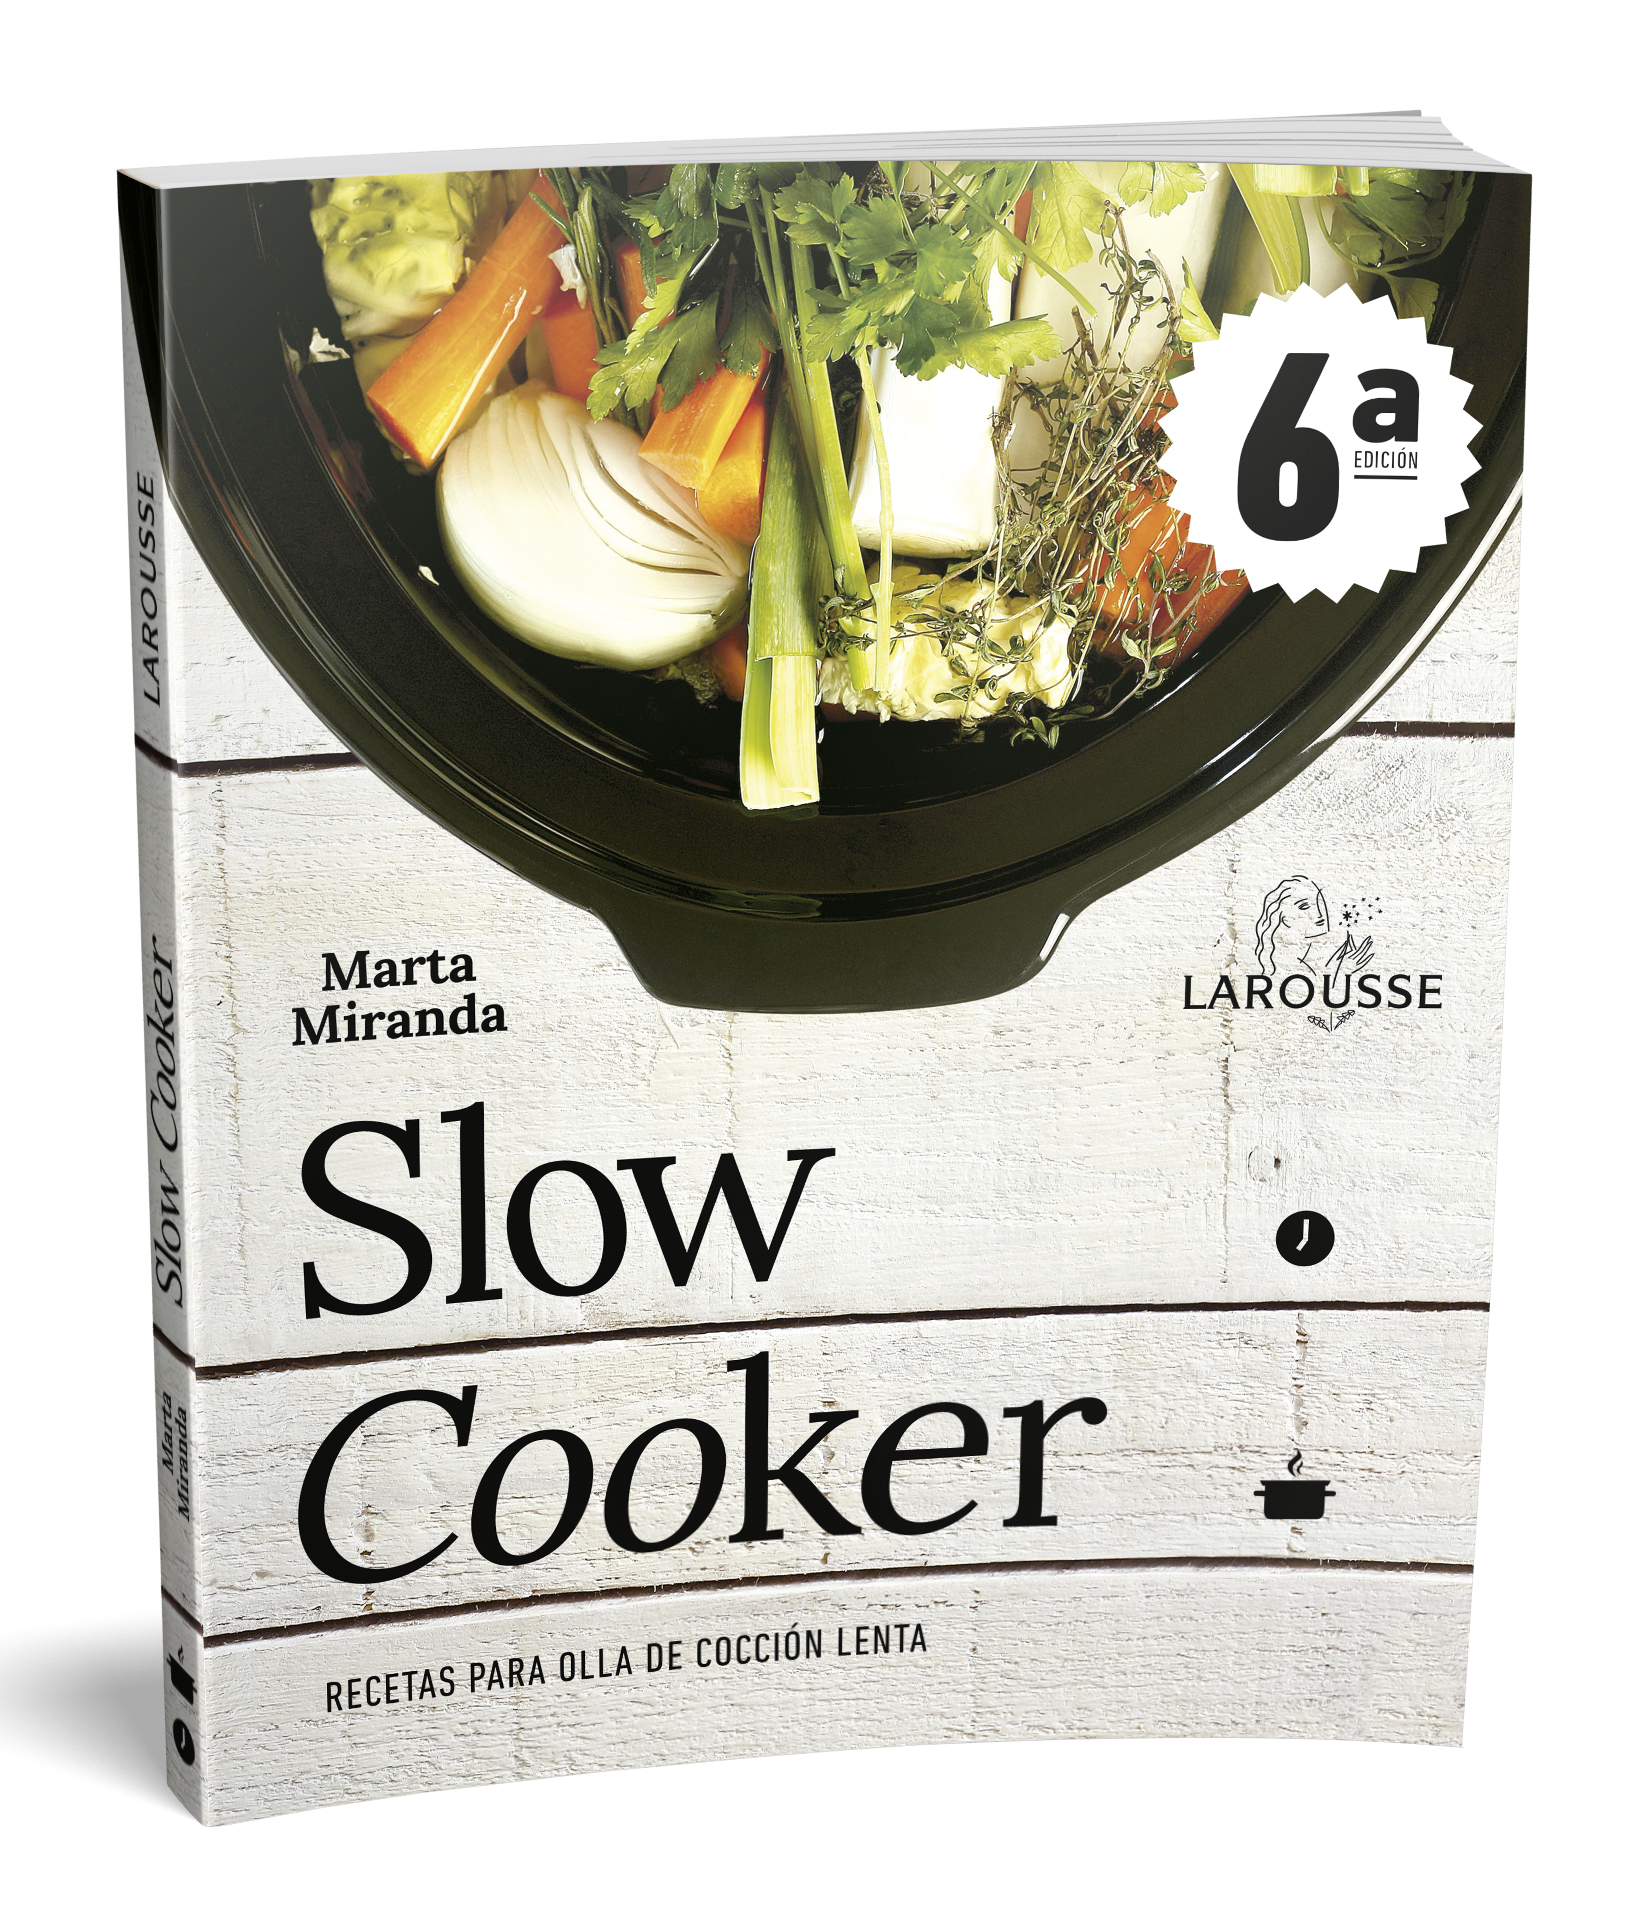 Slow cooker. Recetas para olla de cocción lenta